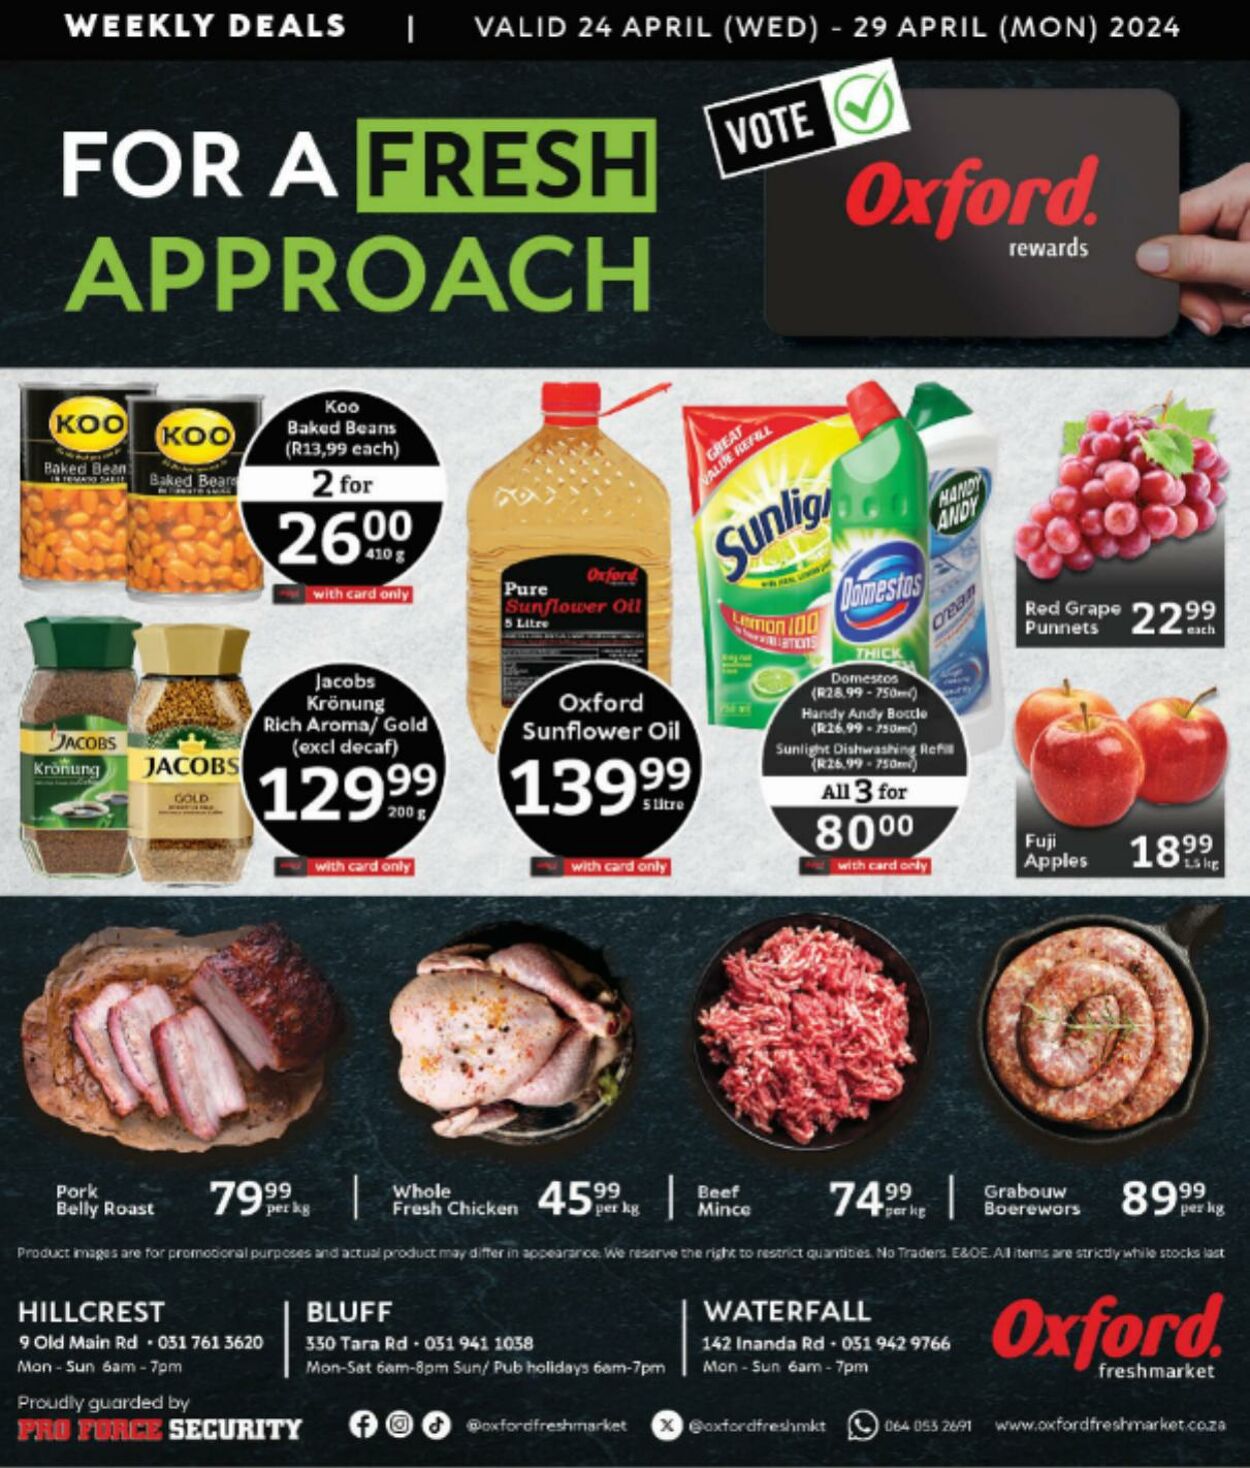 Oxford Freshmarket Promotional specials